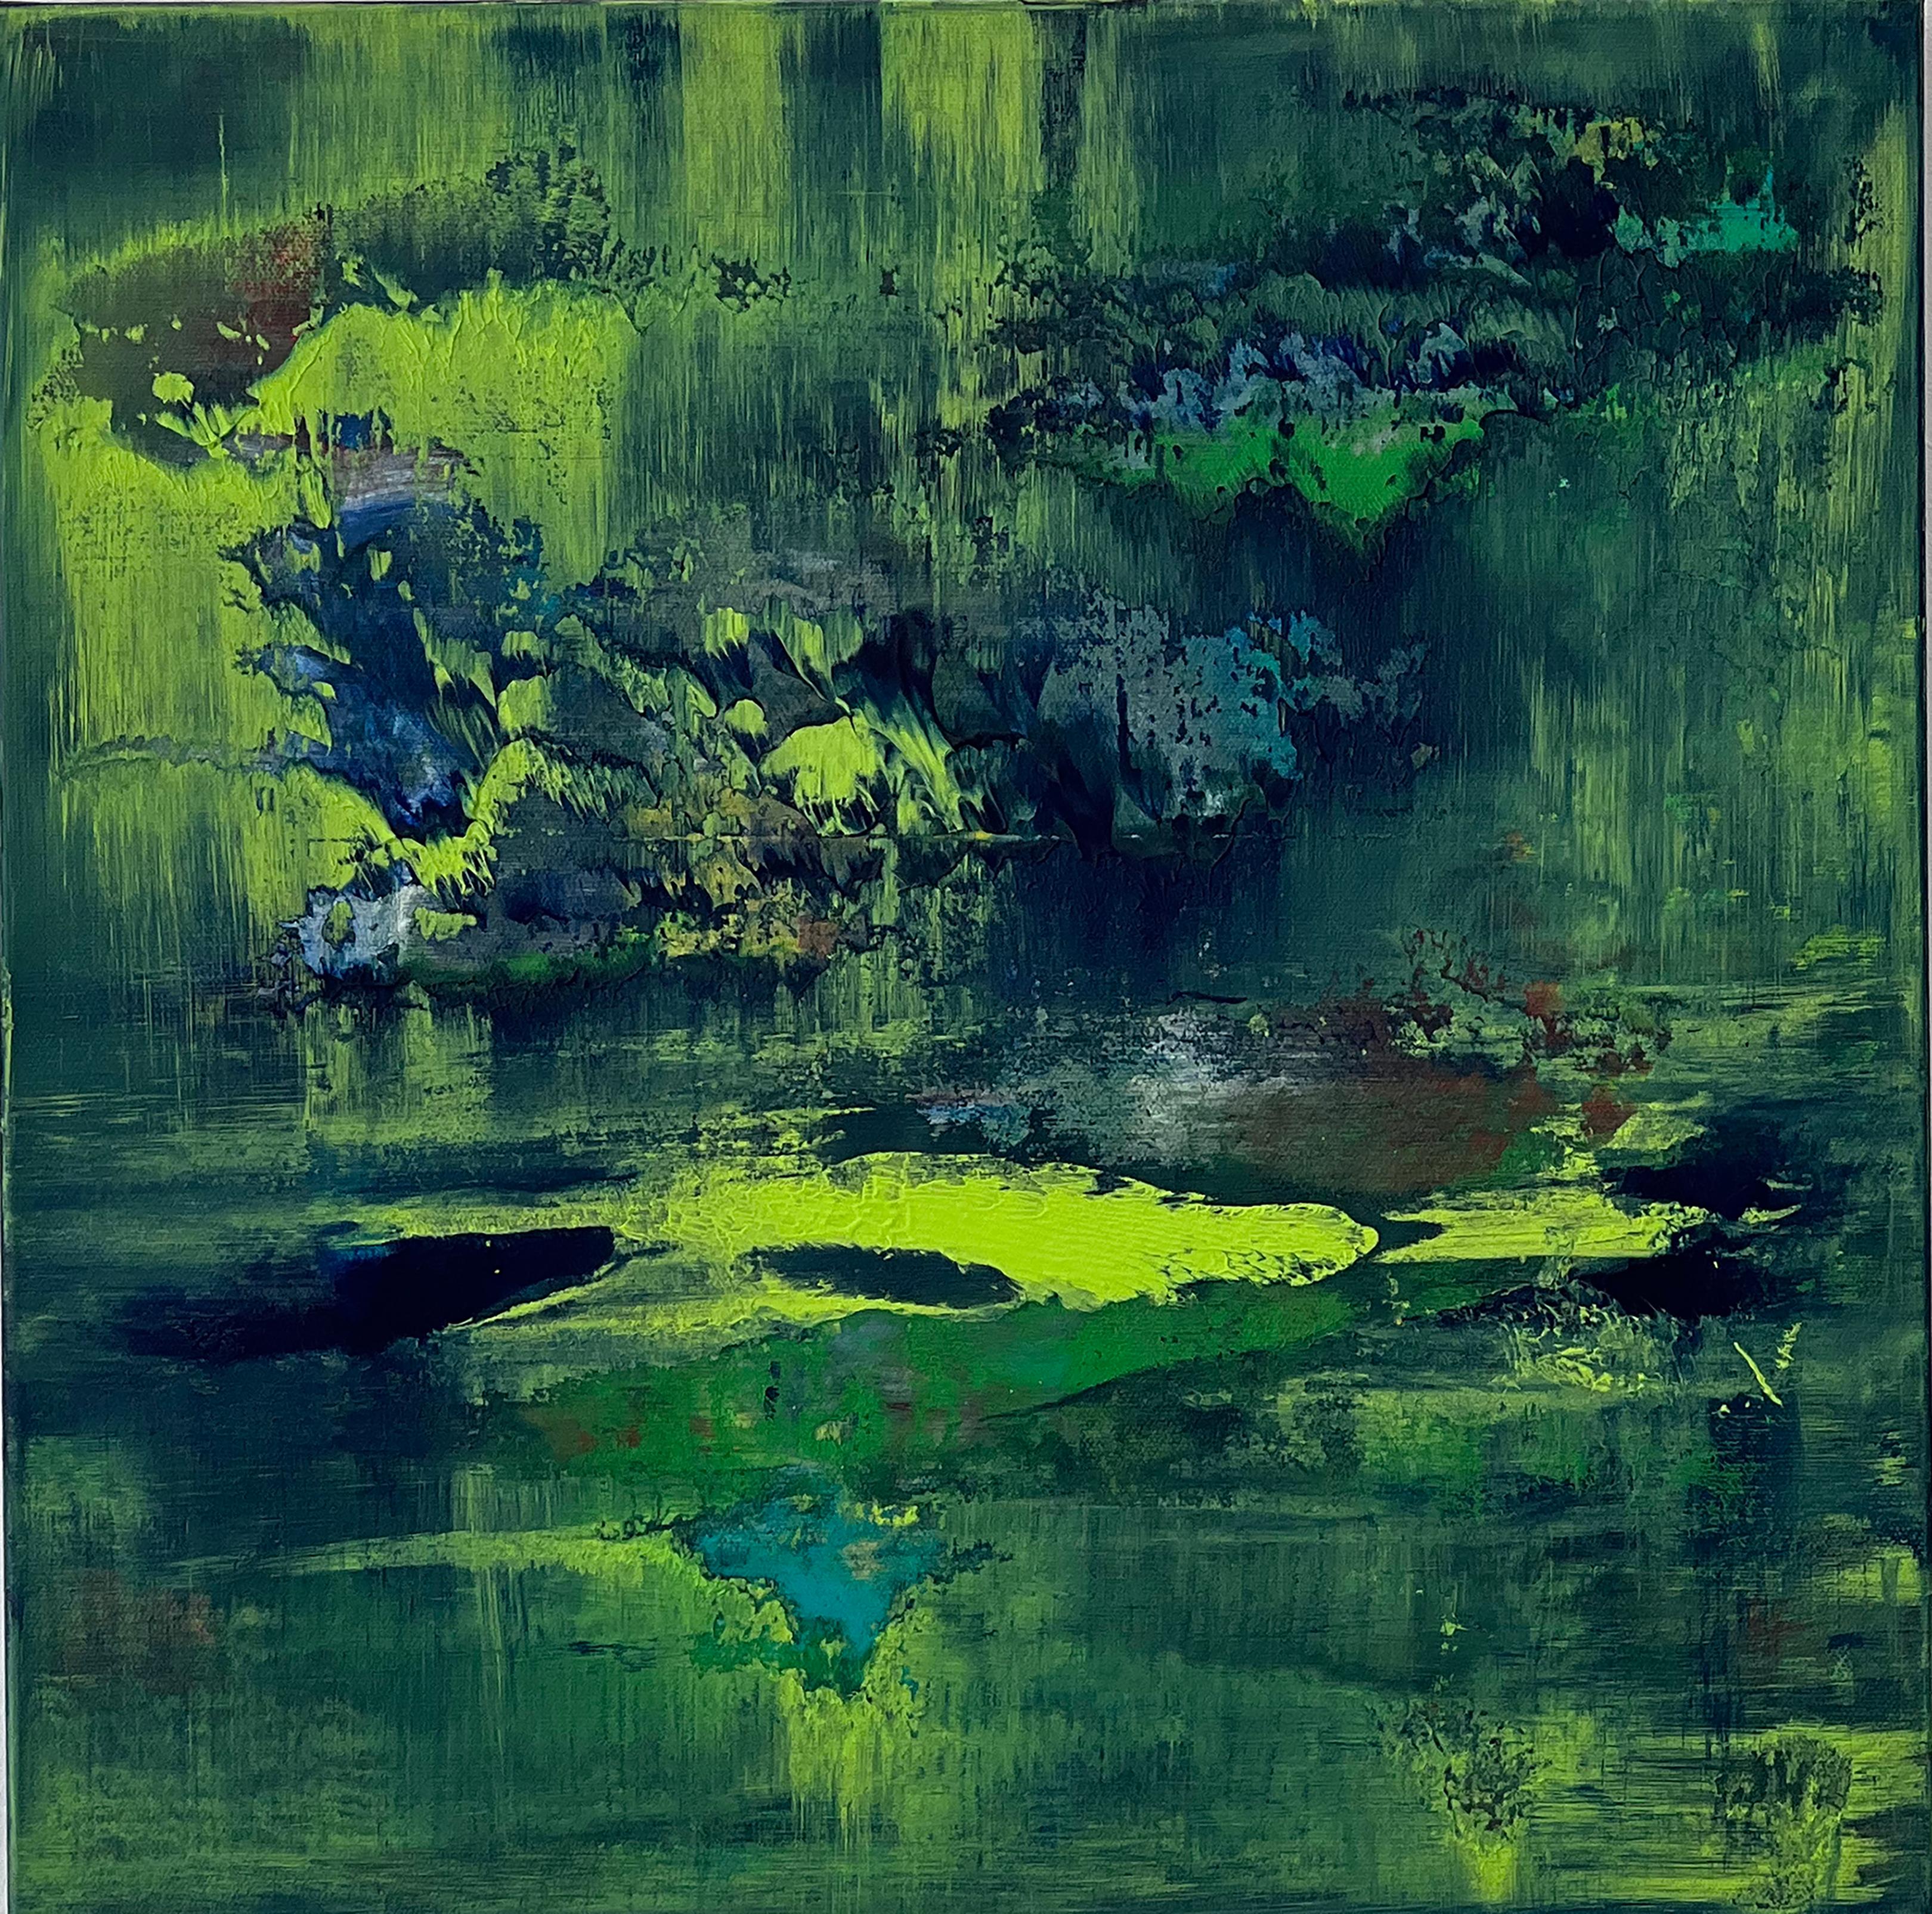 Abstract Painting Nina Weintraub - Dans la jungle - acrylique sur toile